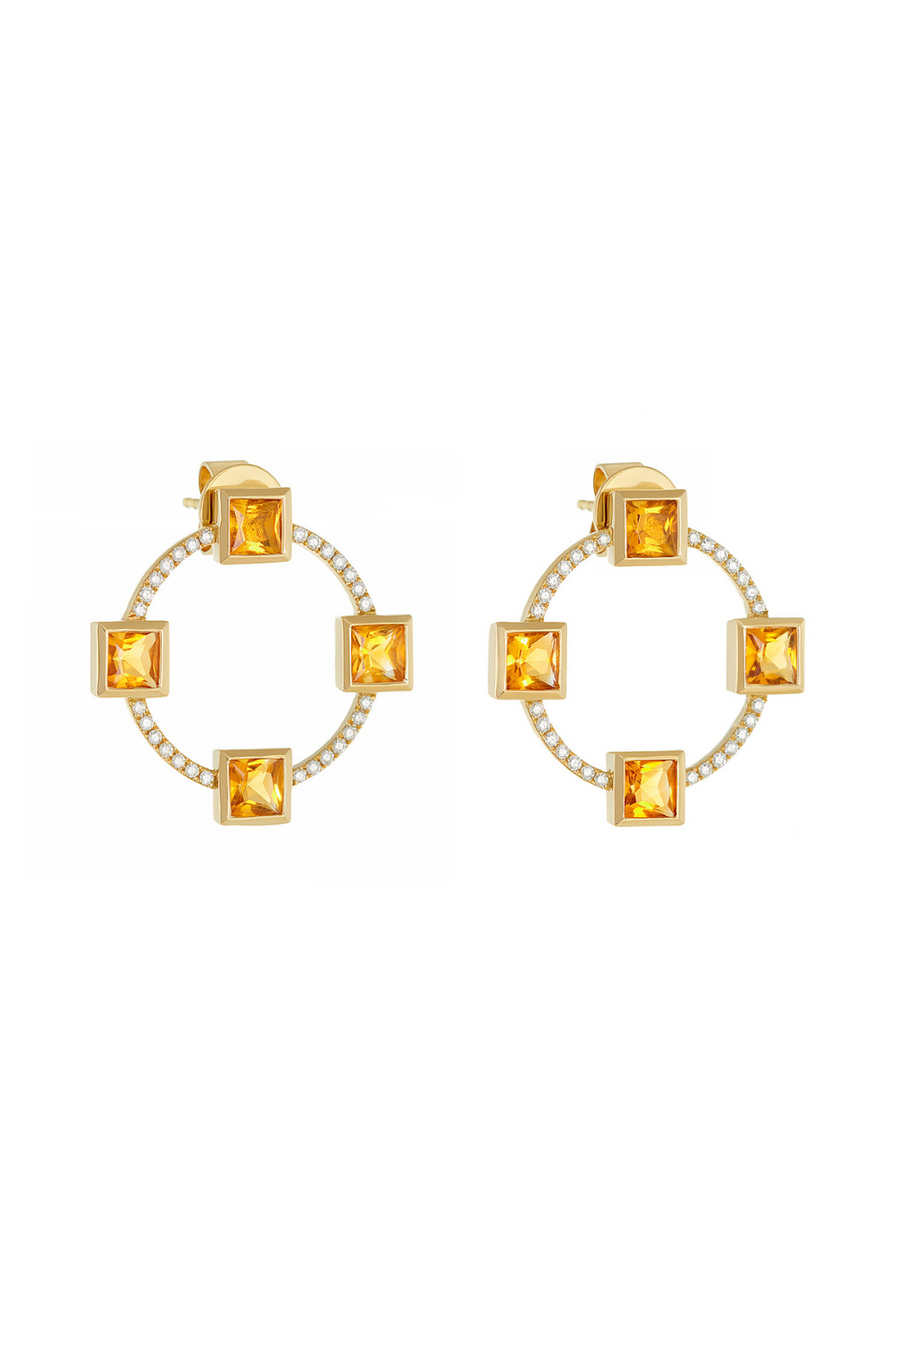 Marigold Citrine 'Club' Earrings in 18k Gold